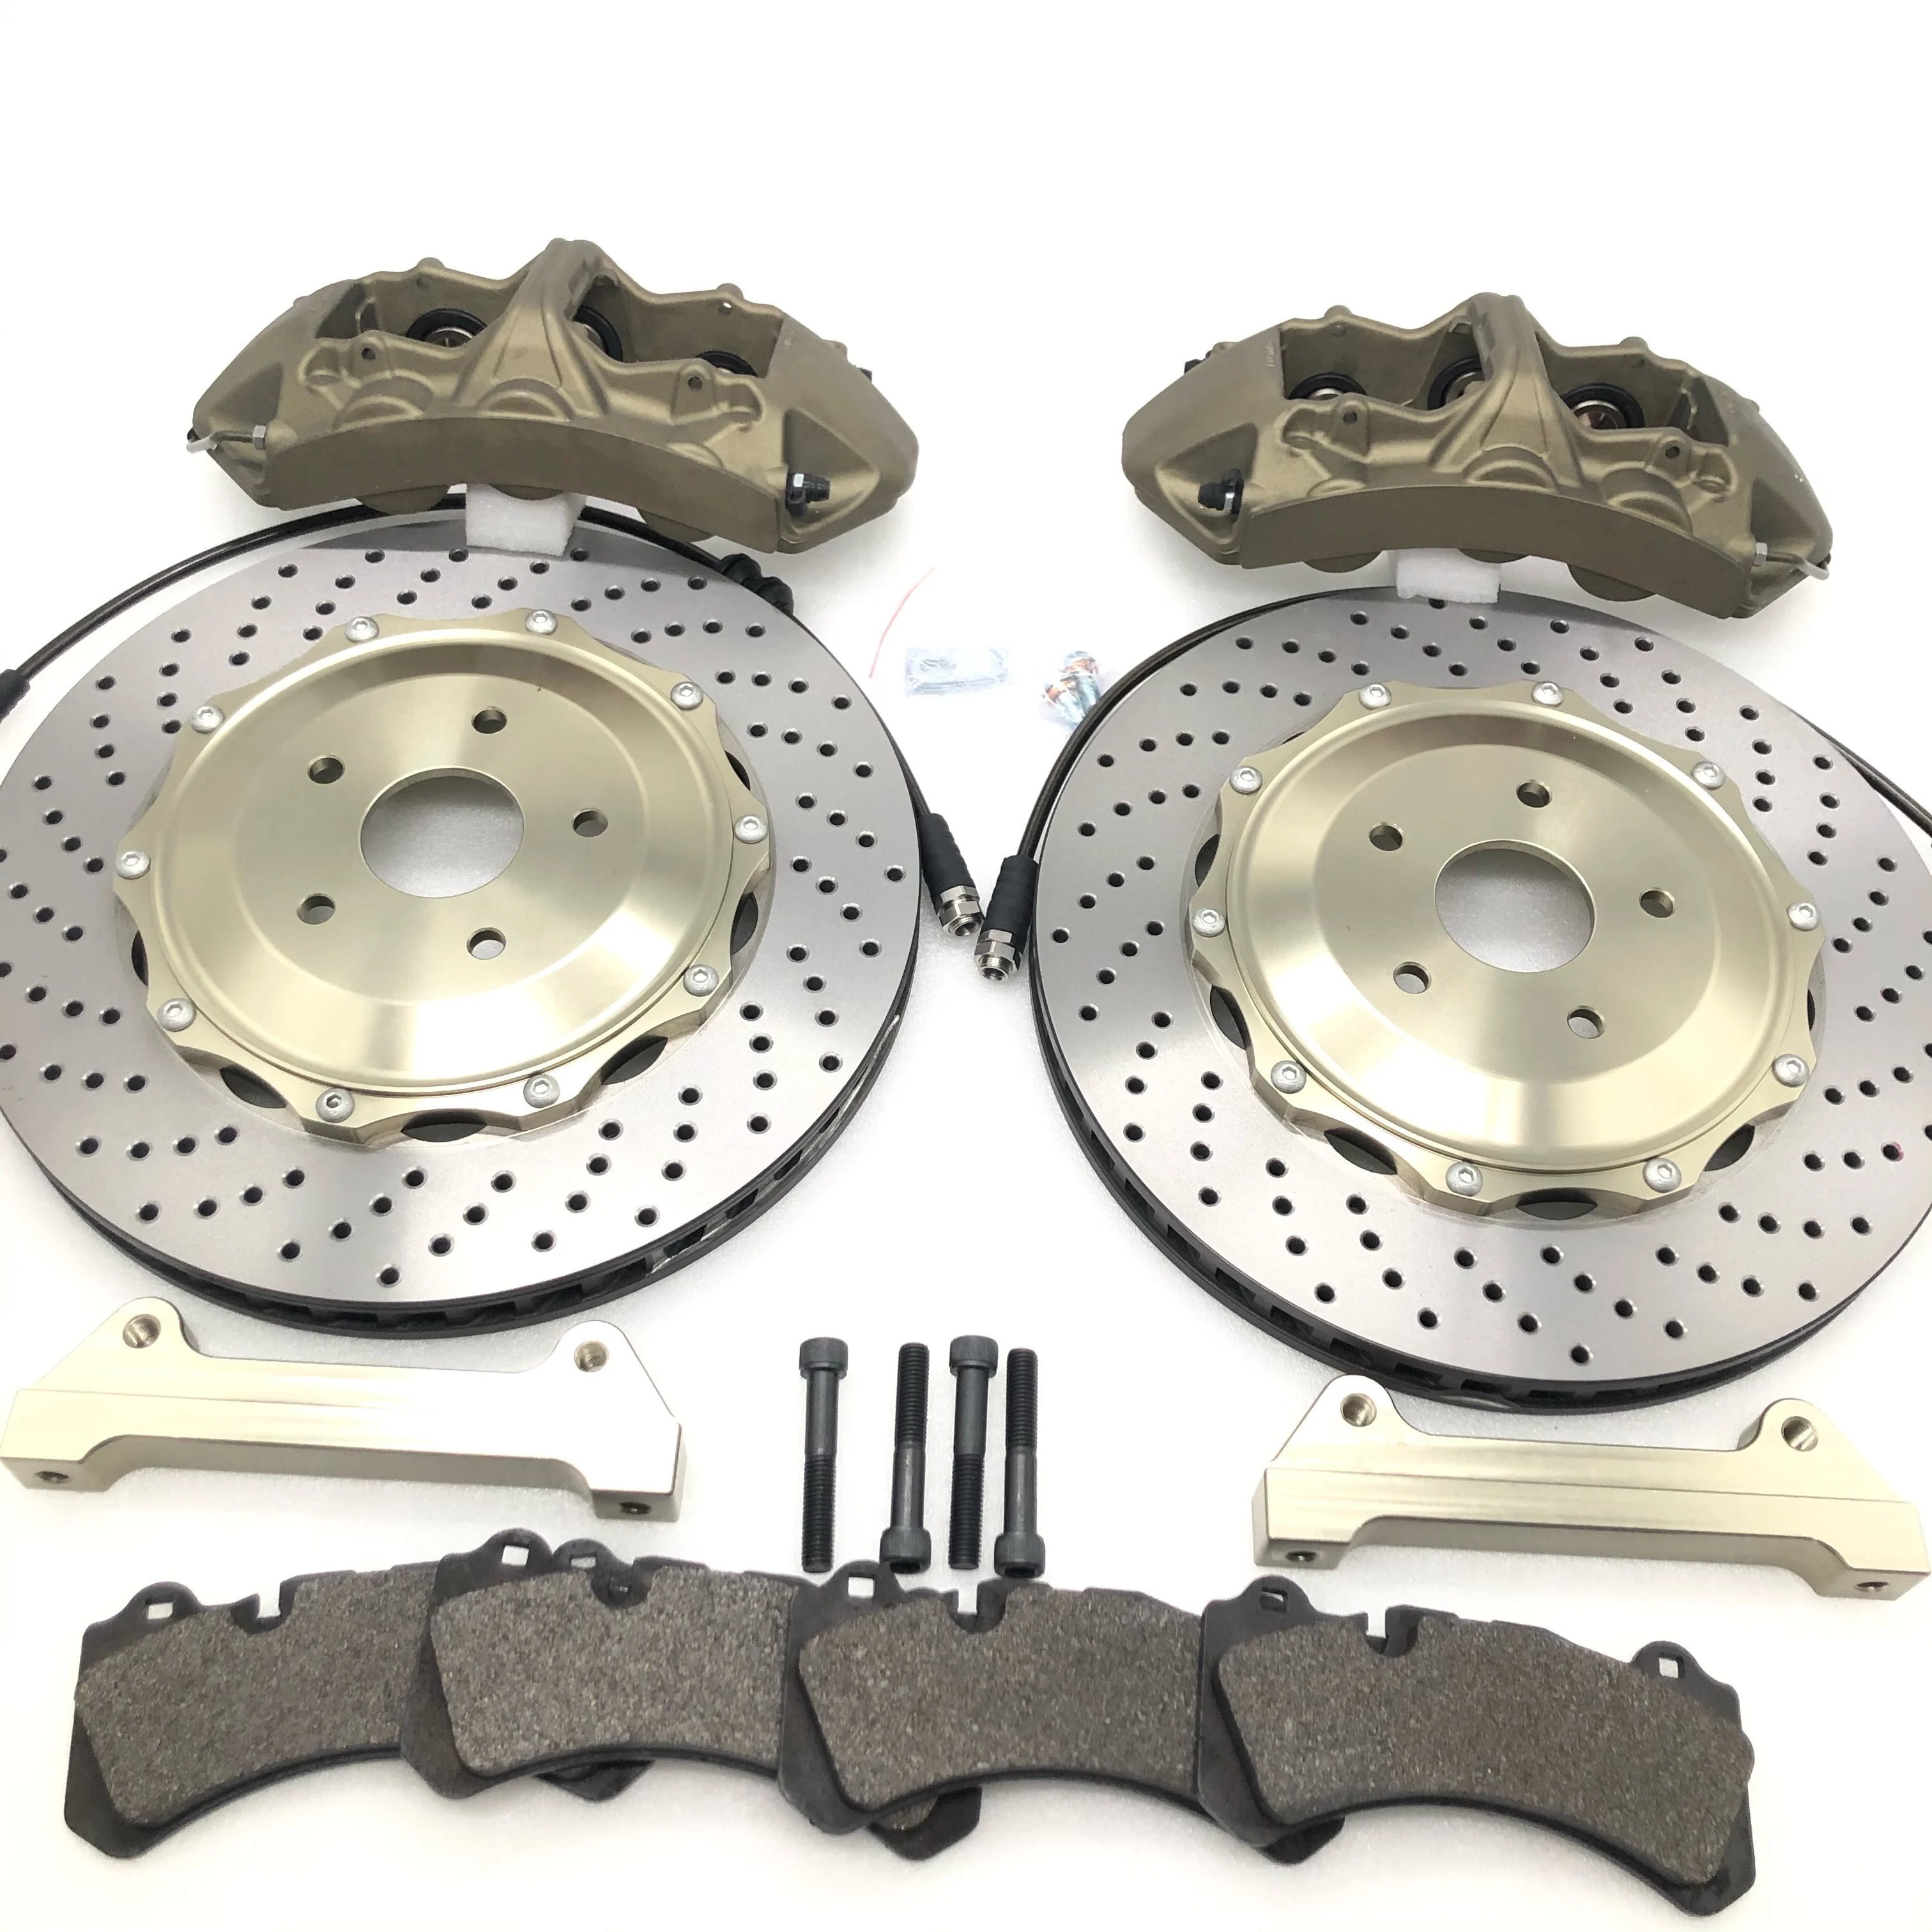 

Jekit car brake 6 pots caliper 380*34mm grey cast iron disc rotor for Toyota-Alfa alphard 2019 land cruiser lc100 brake